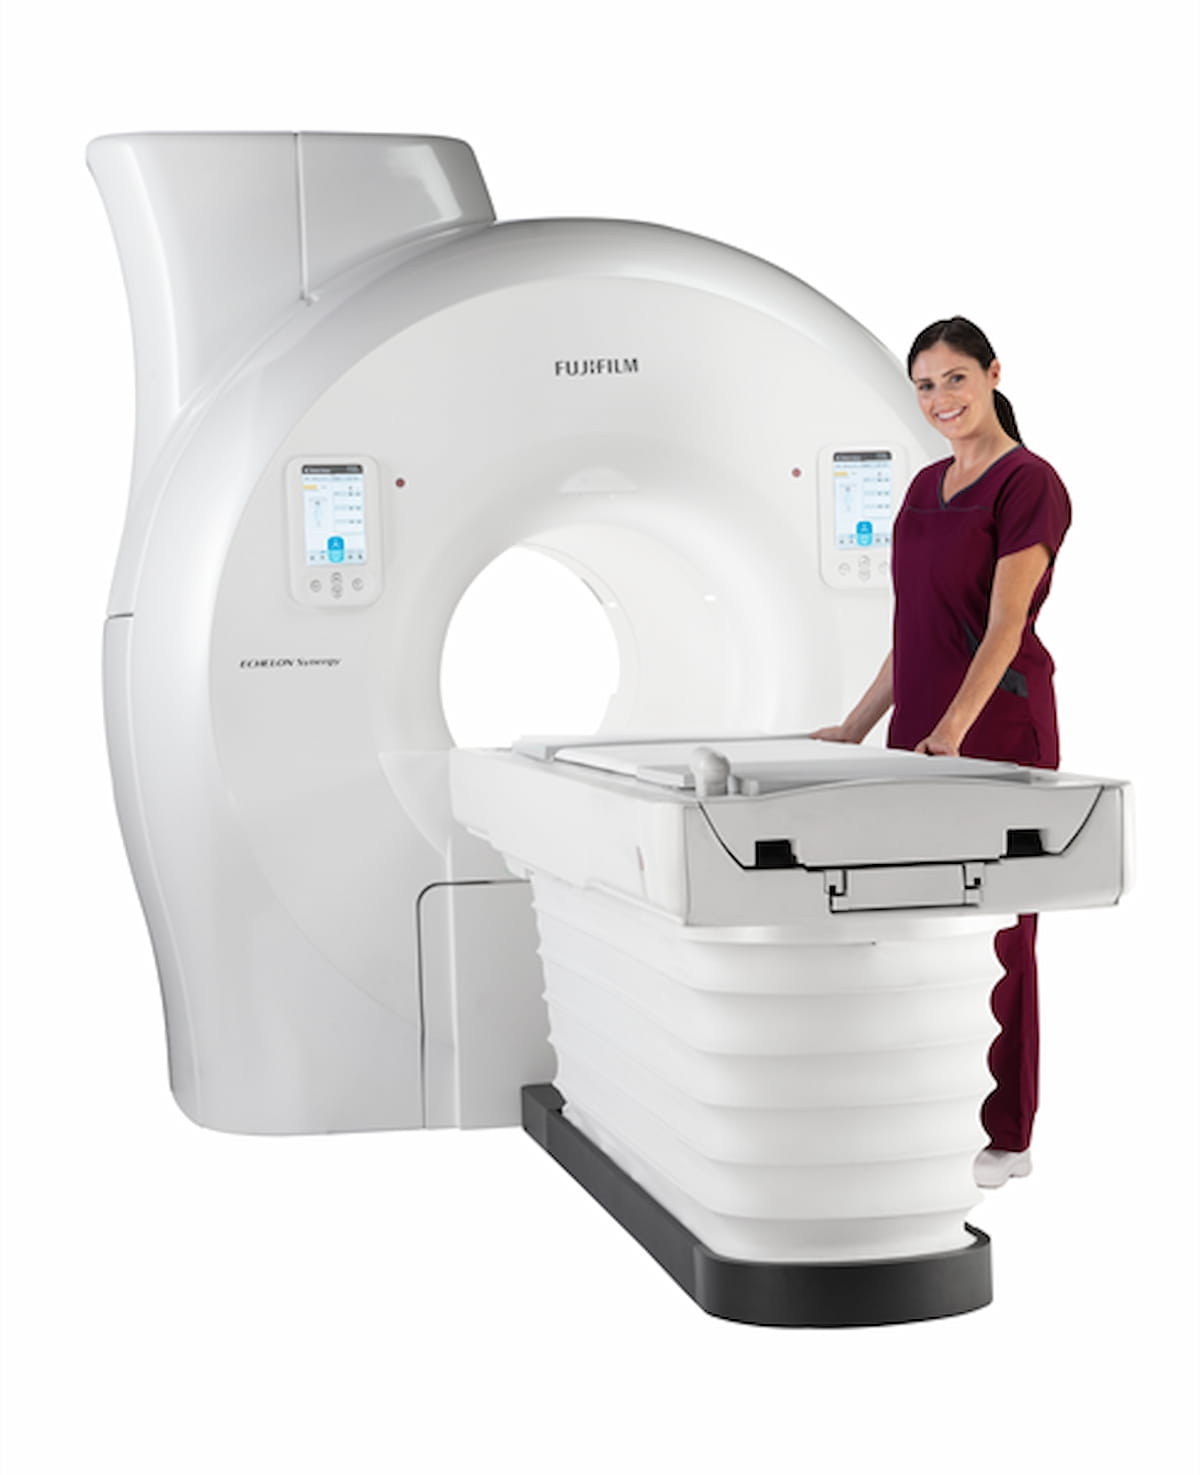 FDA Clears New AI-Powered MRI System from Fujifilm